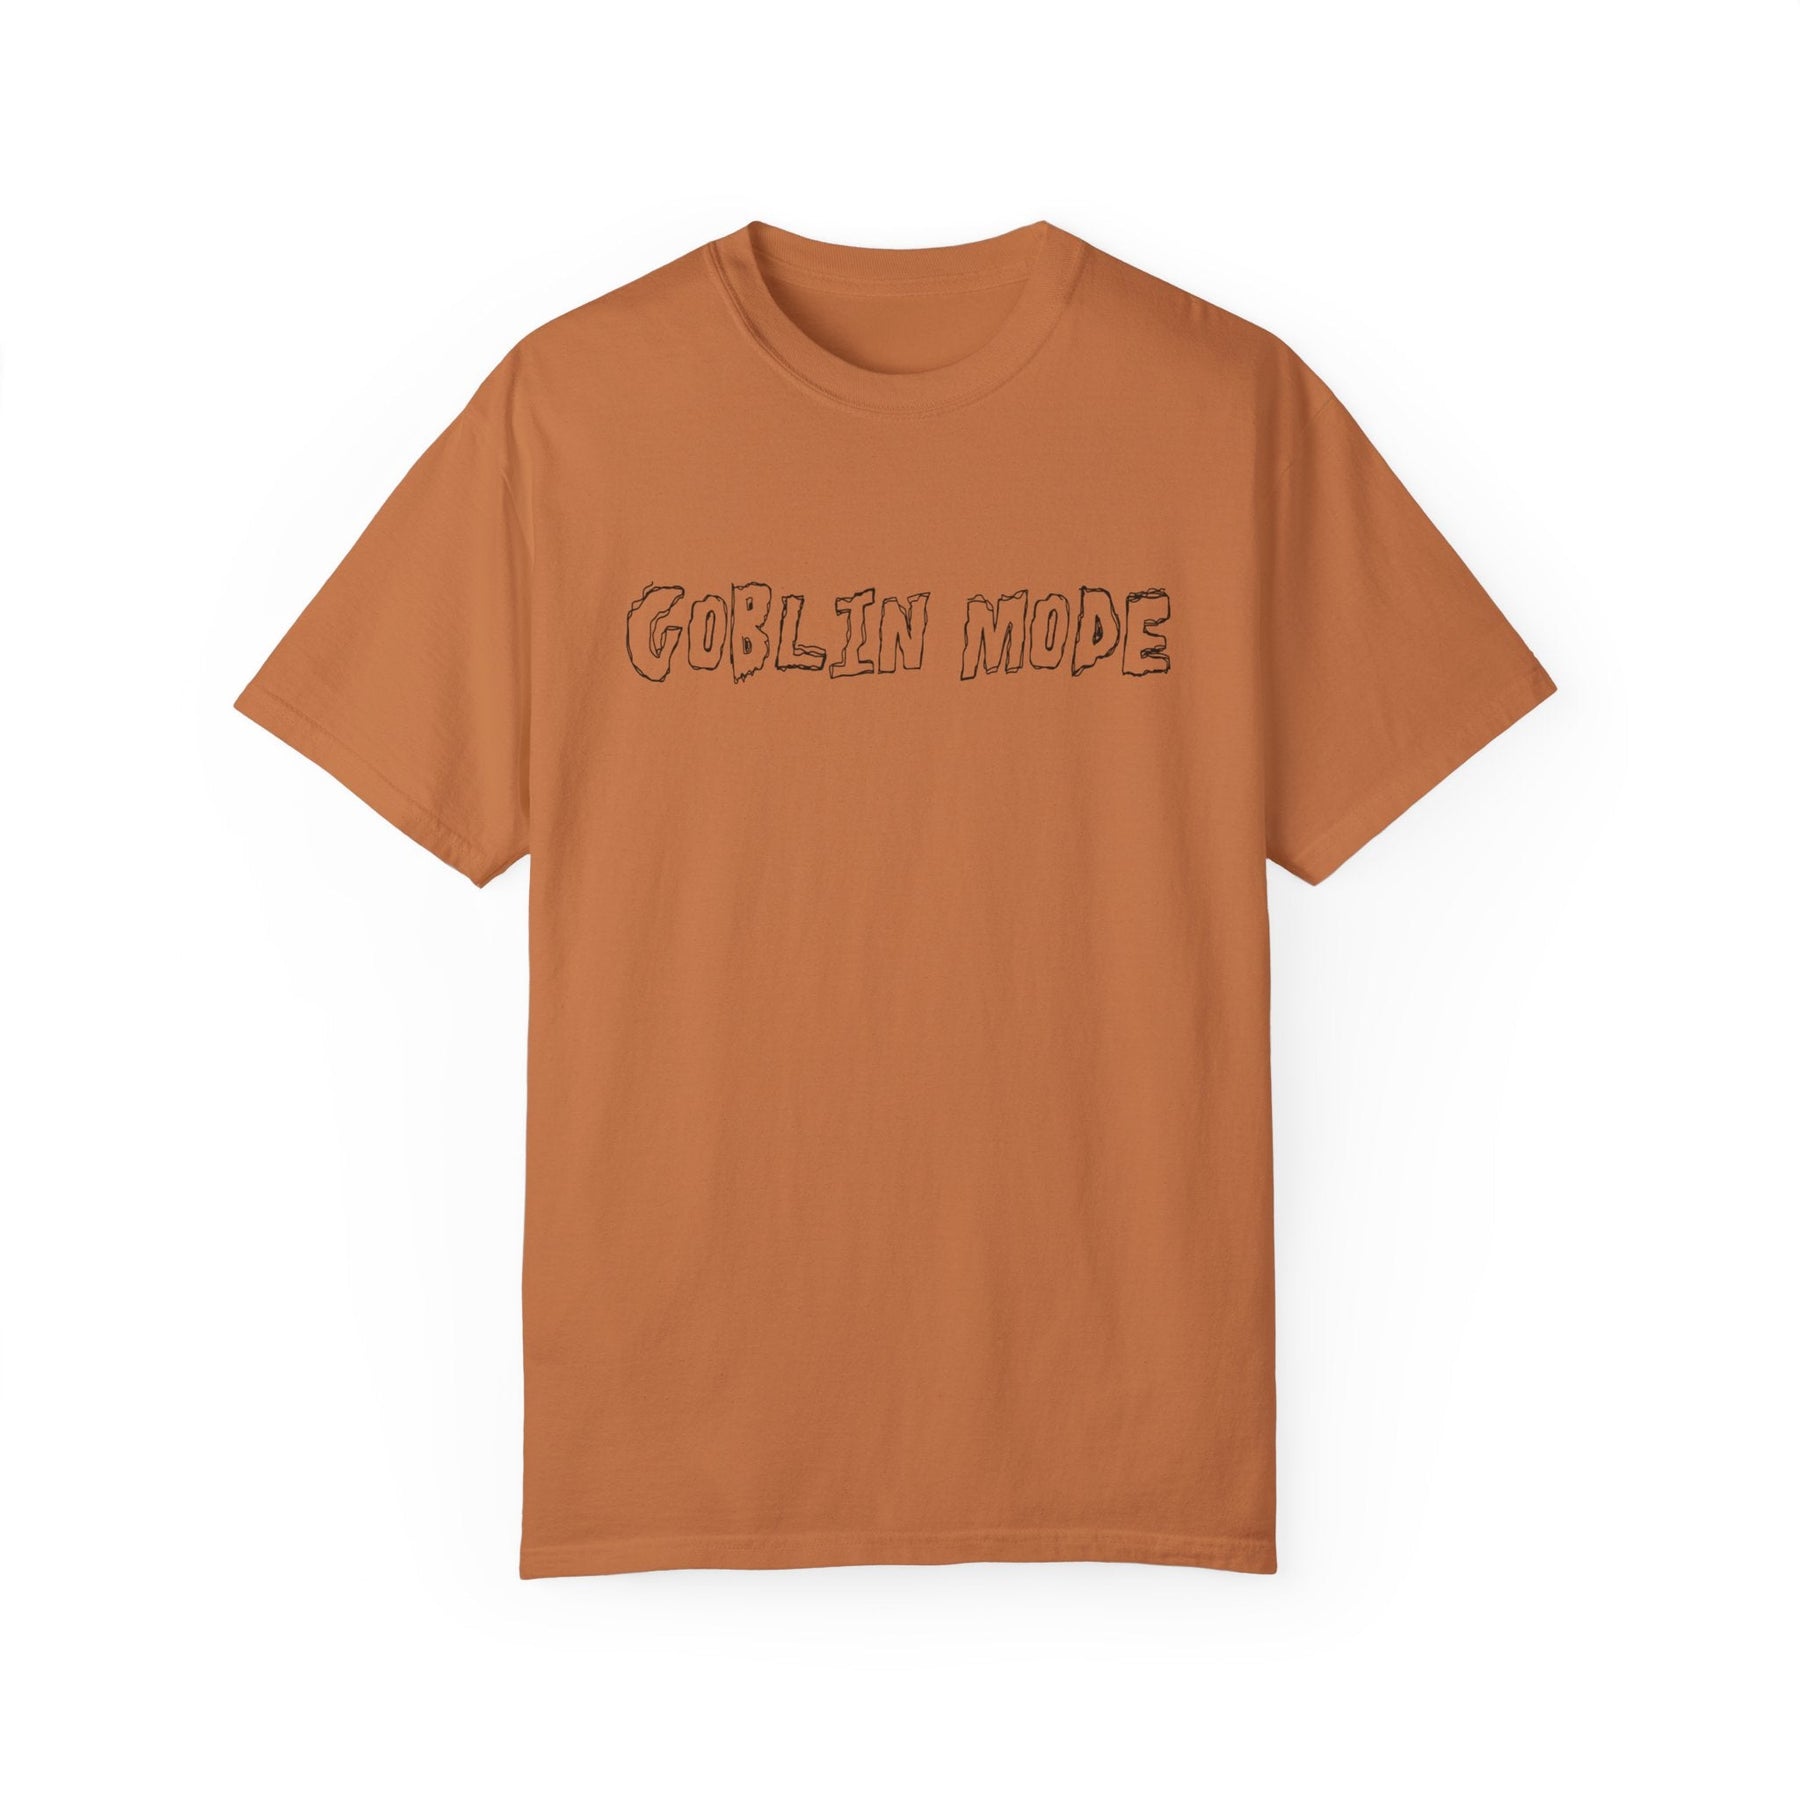 Goblin Mode Comfy Tee - Goth Cloth Co.T - Shirt47299848181837184818